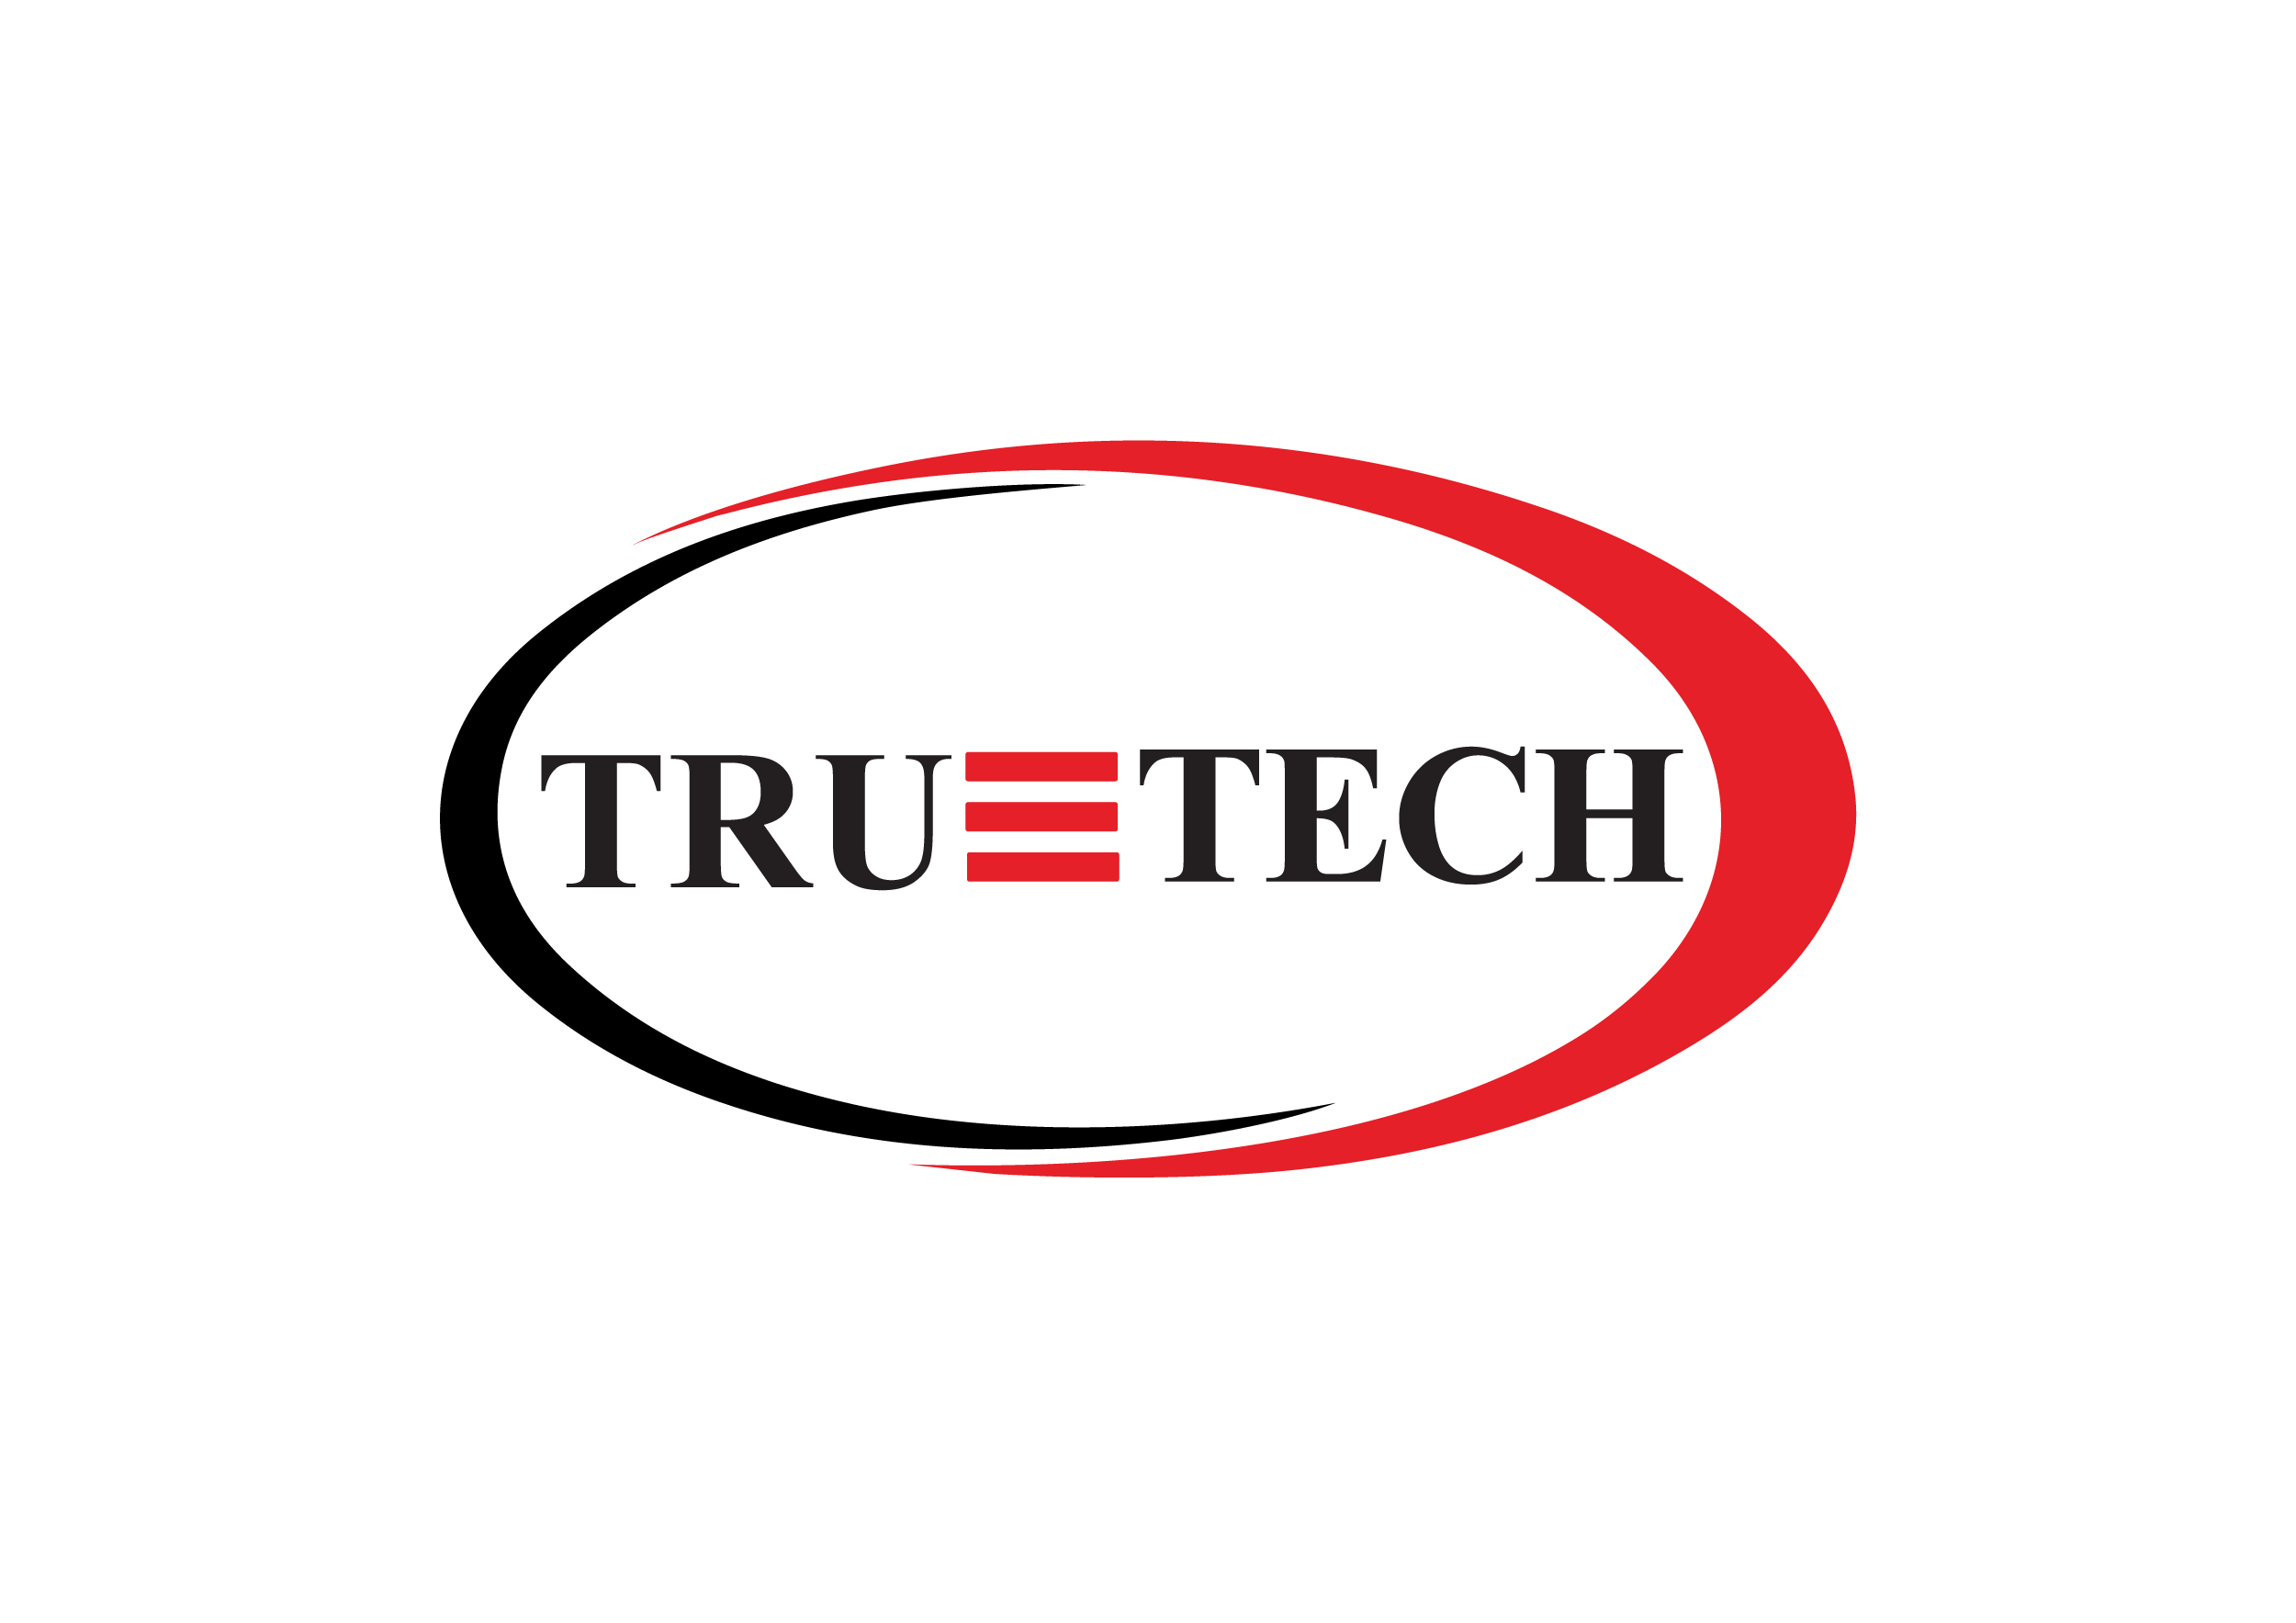 True technology. Trutech. TRUETECH. True Tech. True Technologies.